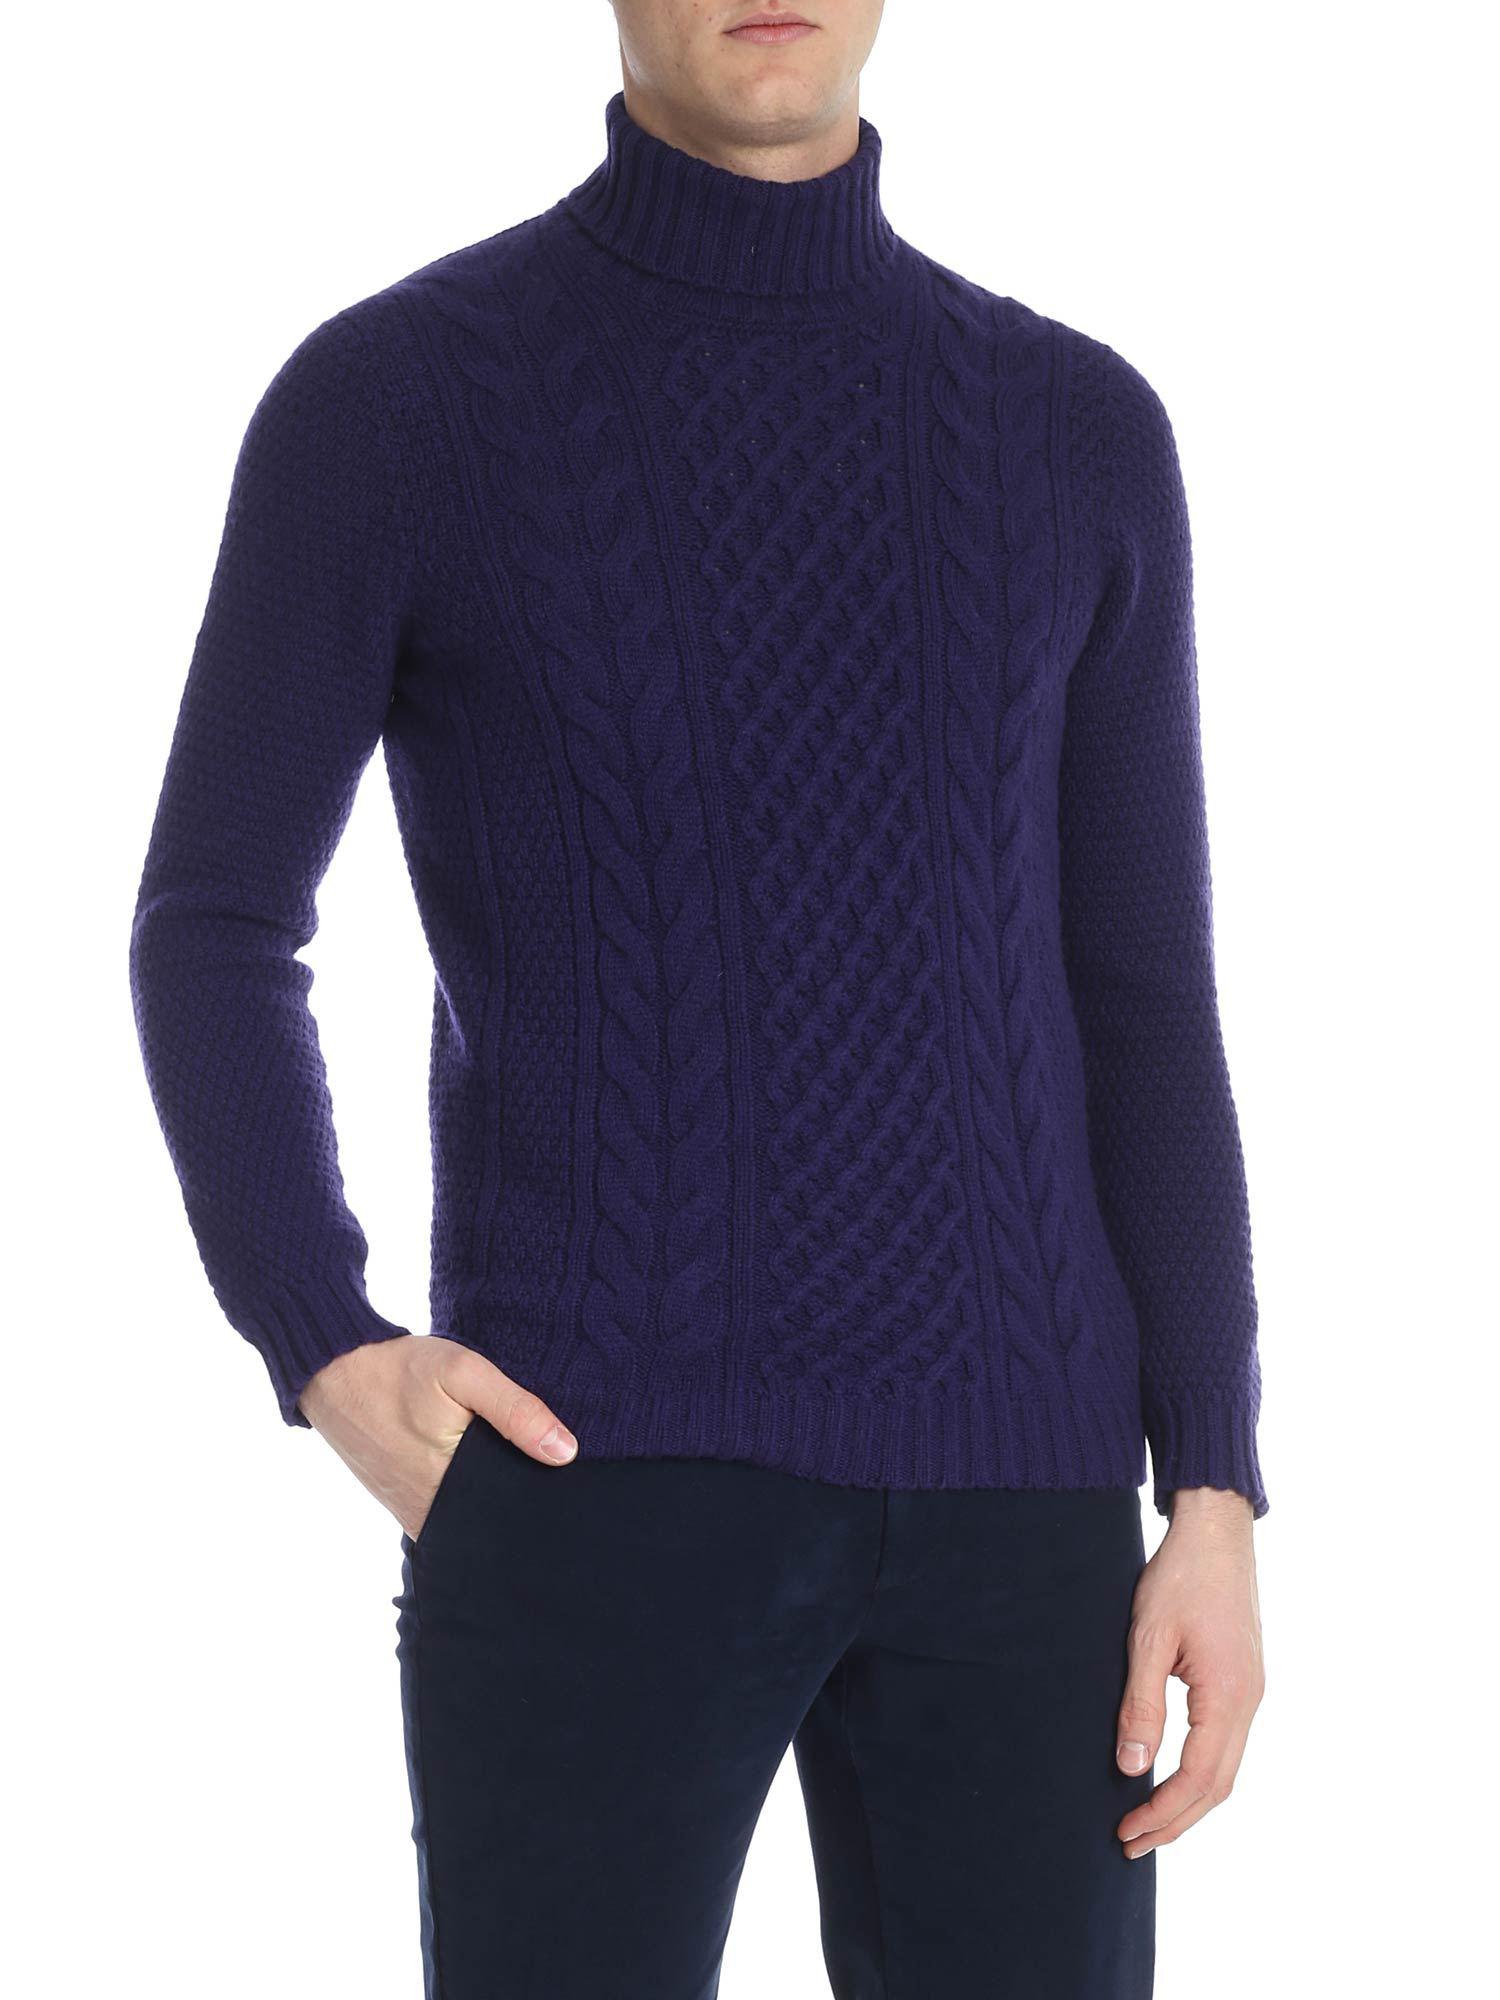 Drumohr Purple Knitted Turtleneck Sweater for Men - Lyst